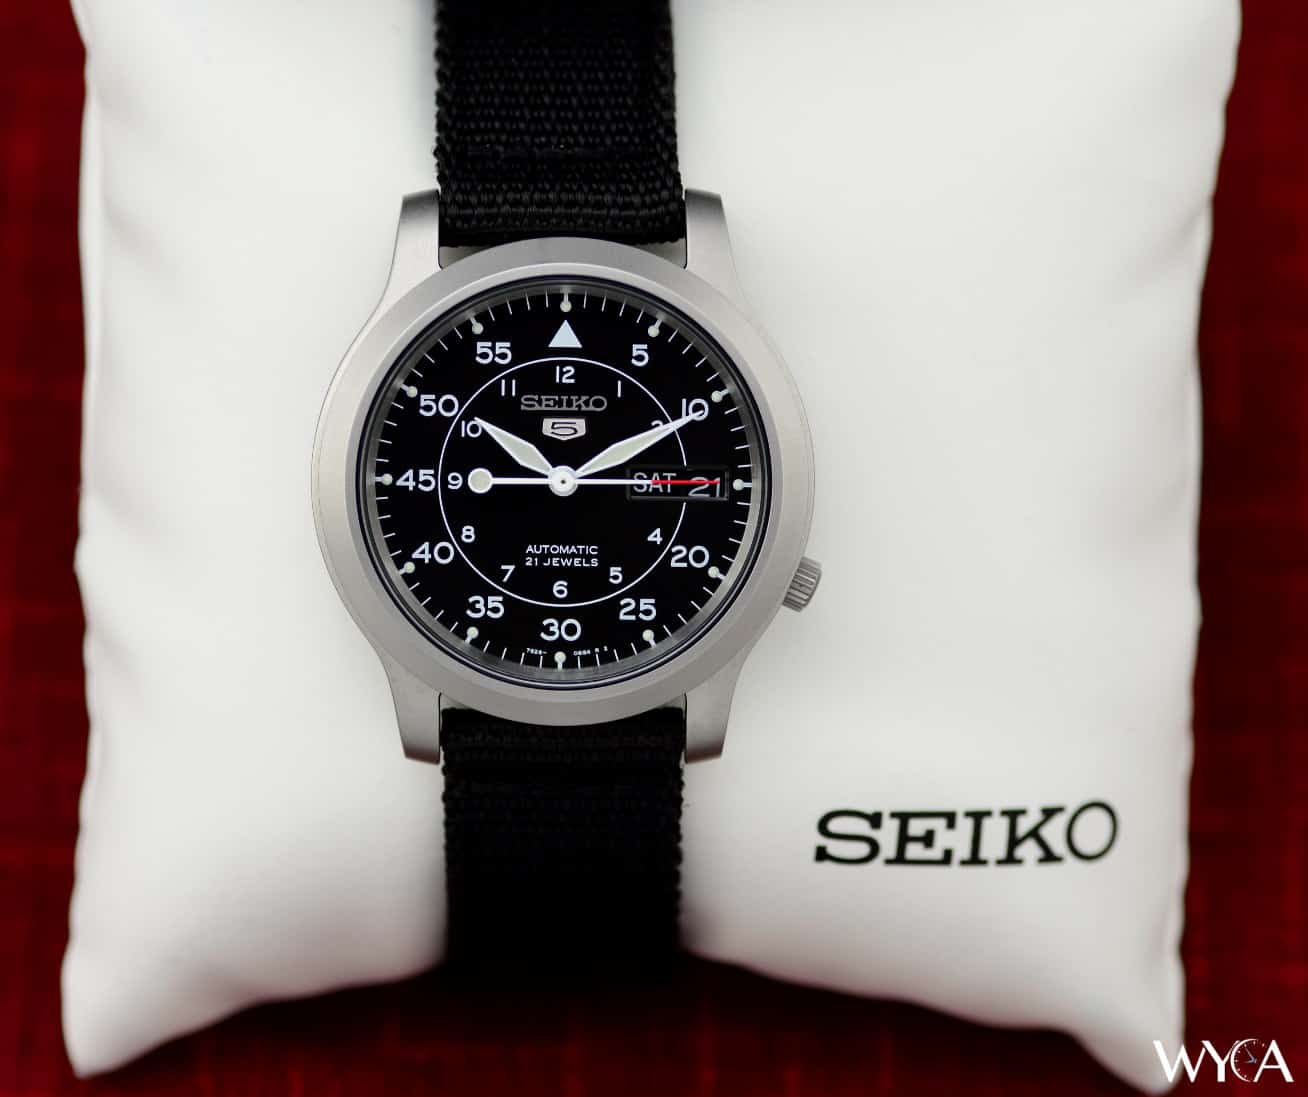 Seiko 5 SNK809 Automatic Review